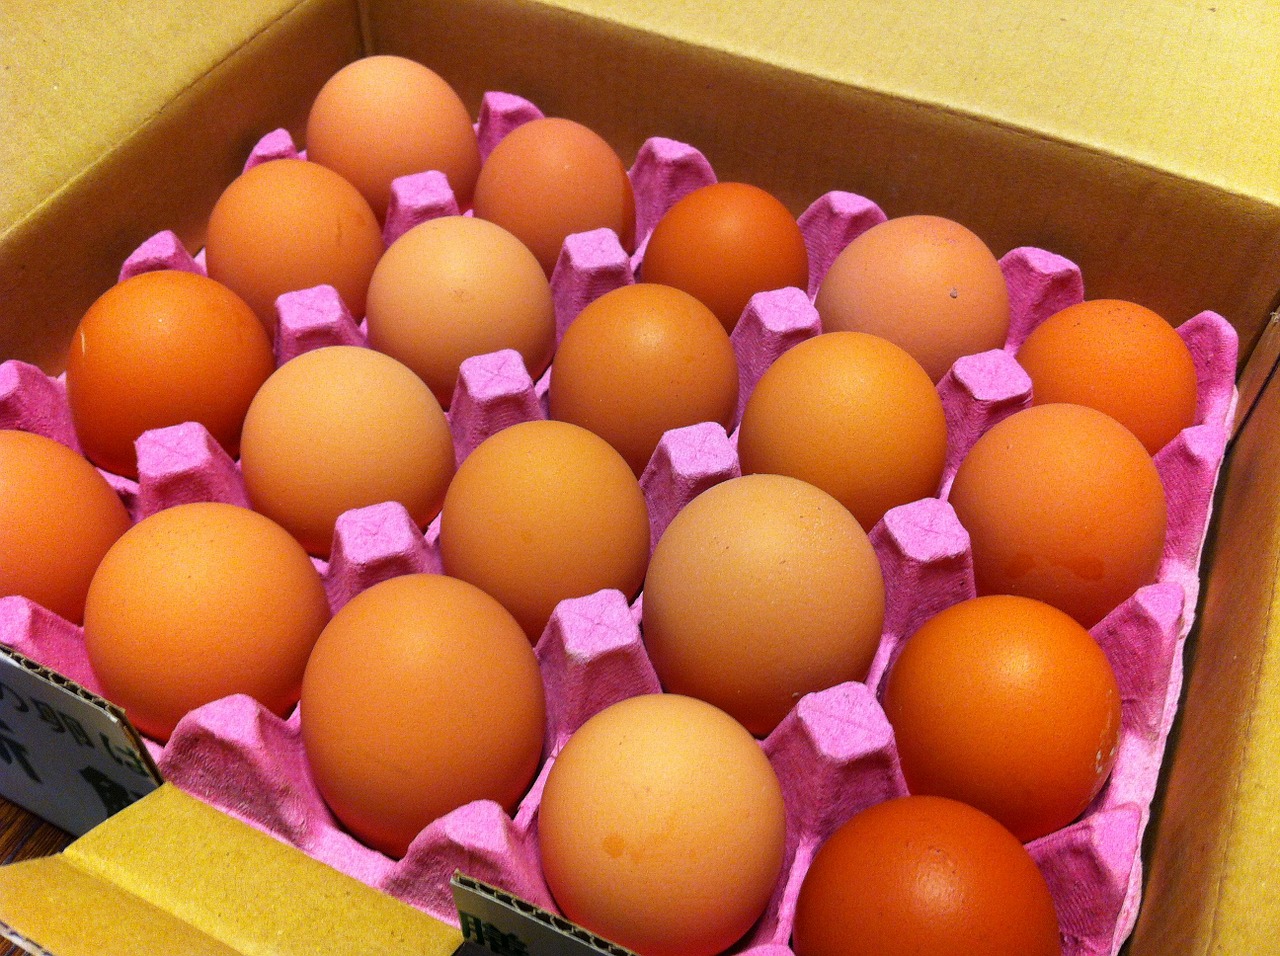 Kiaušinių Dėžutė, Kiaušinių Dėžutė, Kiaušinių Dėžutė, Kiaušiniai, Maistas, Mityba, Baltymas, Nemokamos Nuotraukos,  Nemokama Licenzija